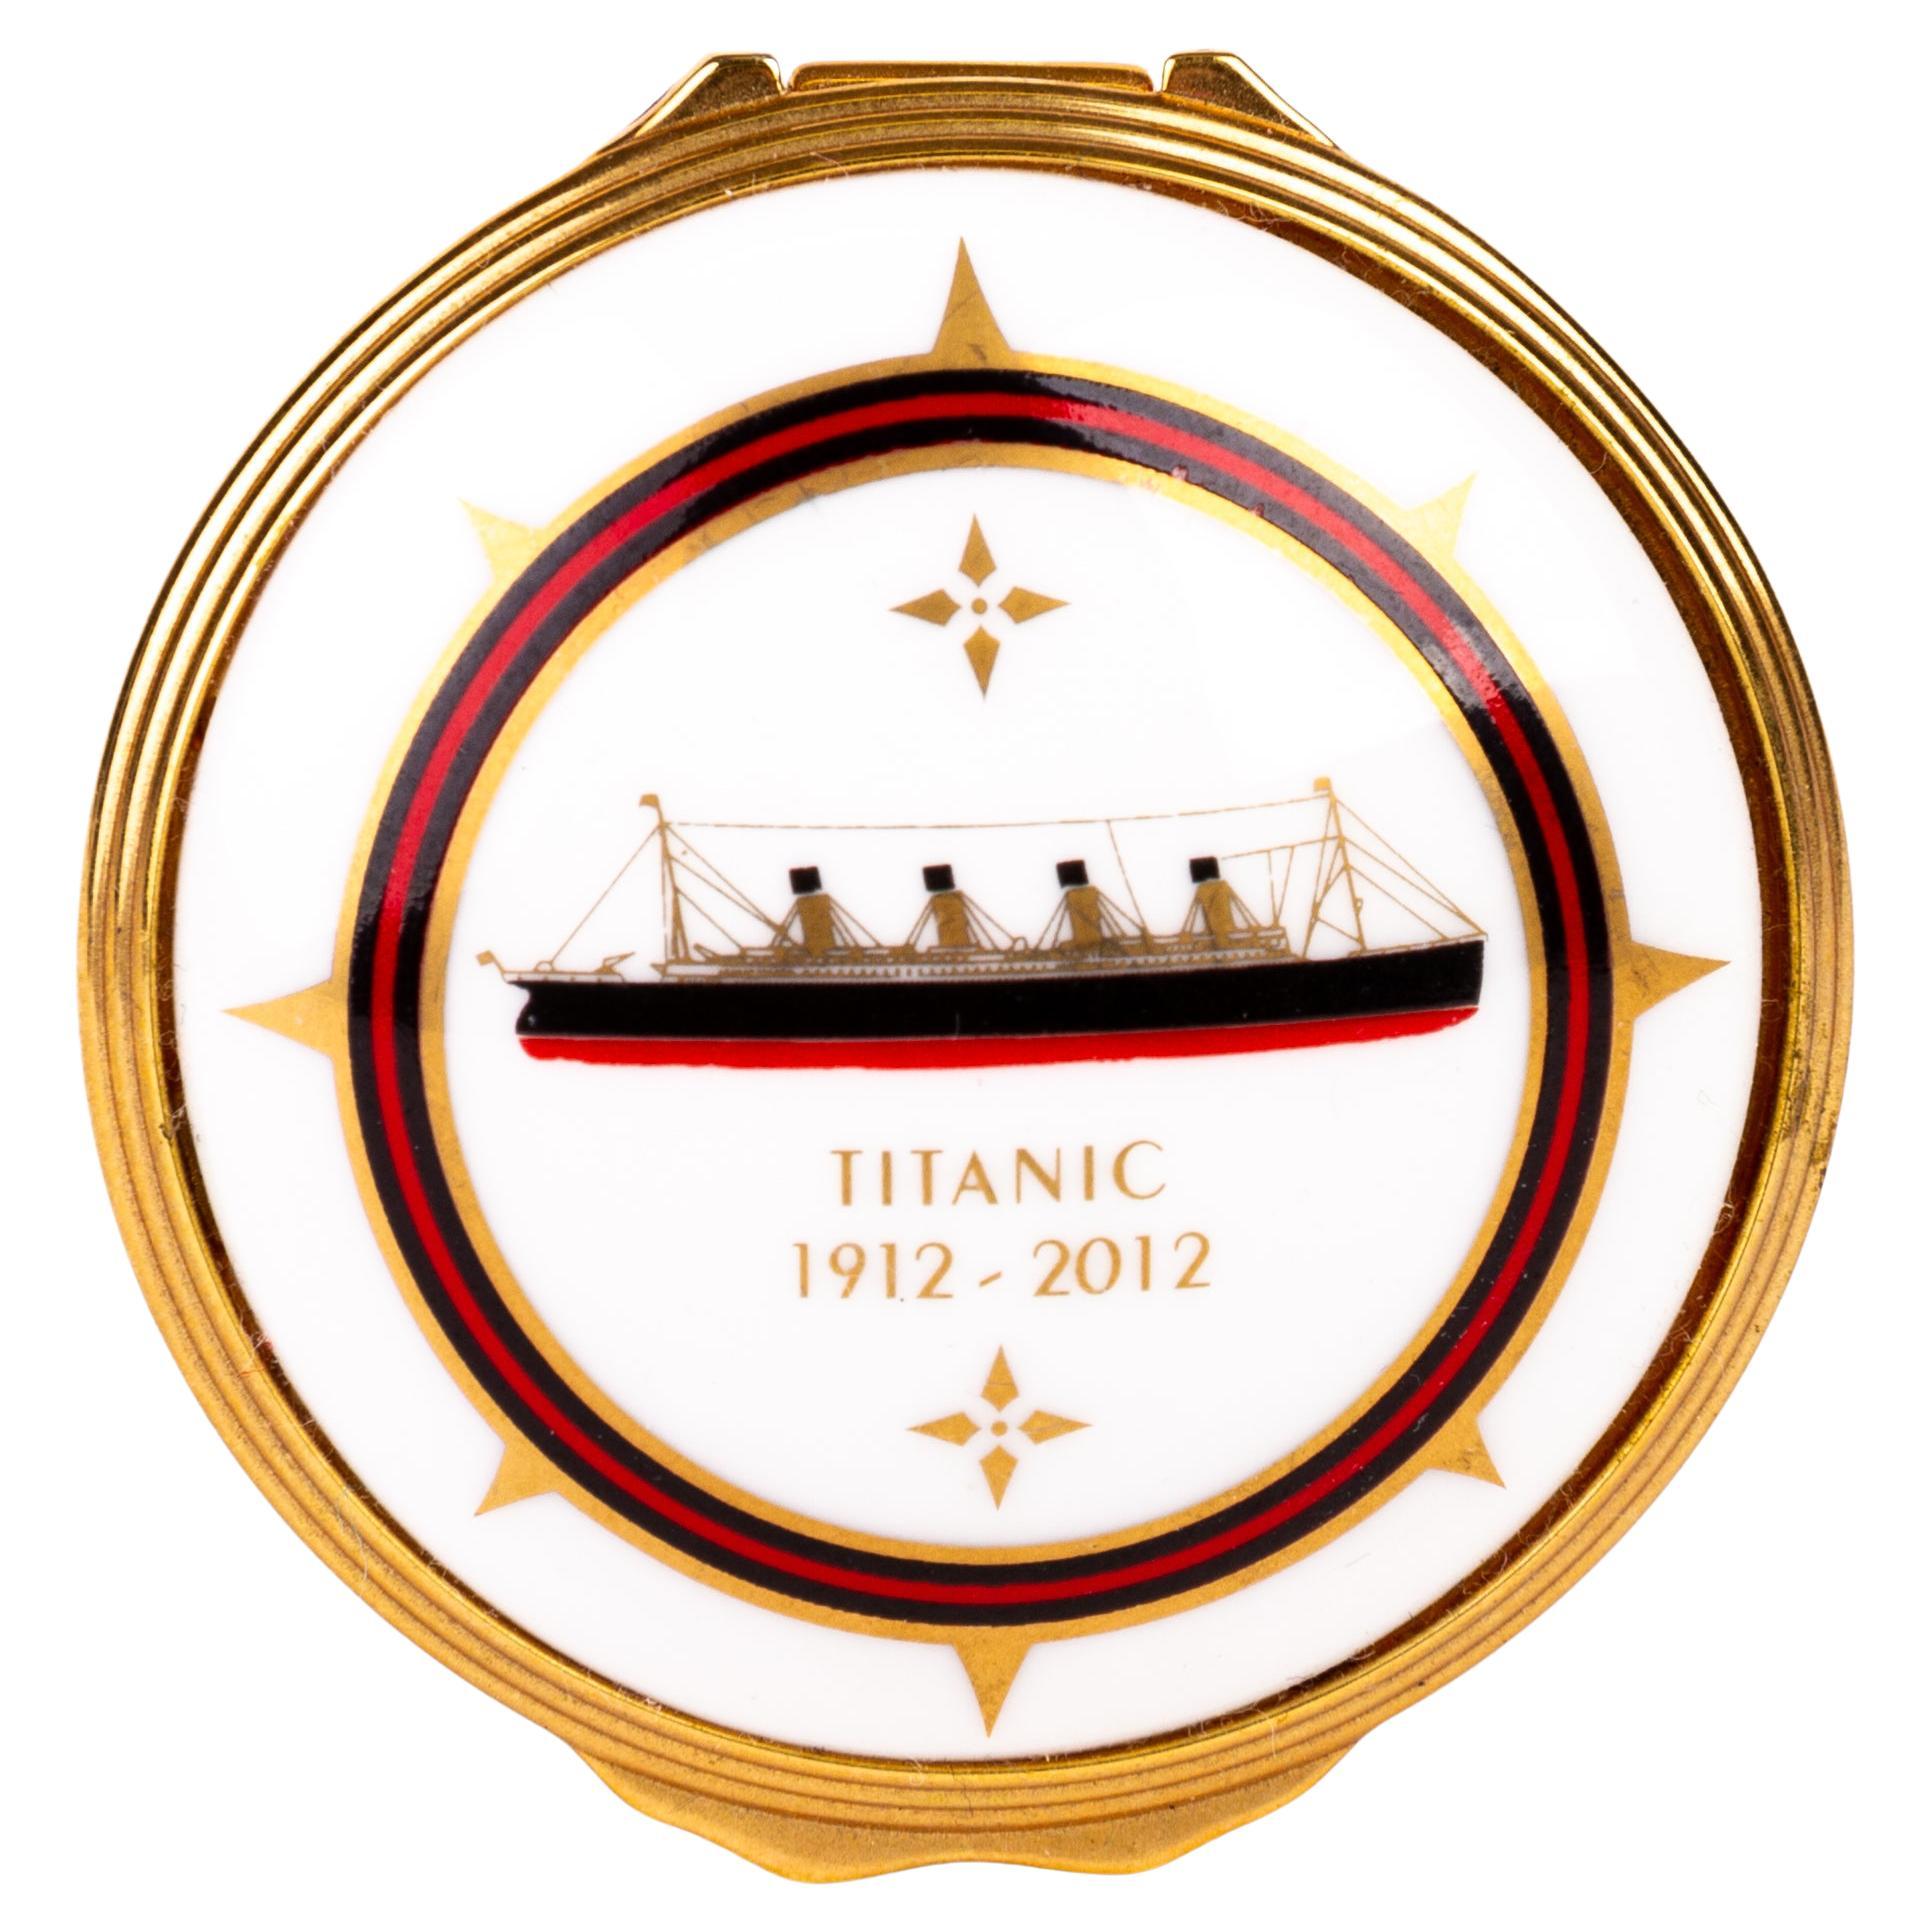 William Edwards Titanic Nautical Interest 24KT Gold Porcelain Pillbox  For Sale